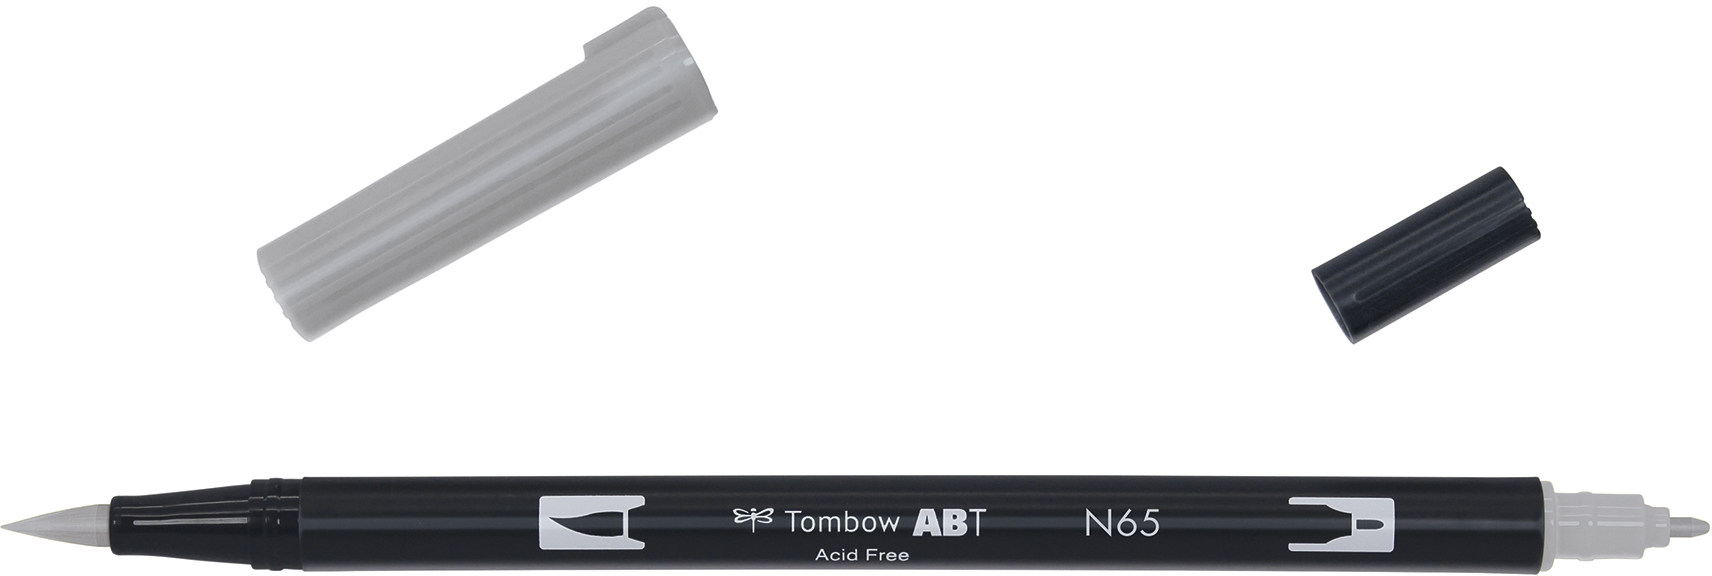 TOMBOW Dual Brush Pen ABT N65 cool grey 5 cool grey 5